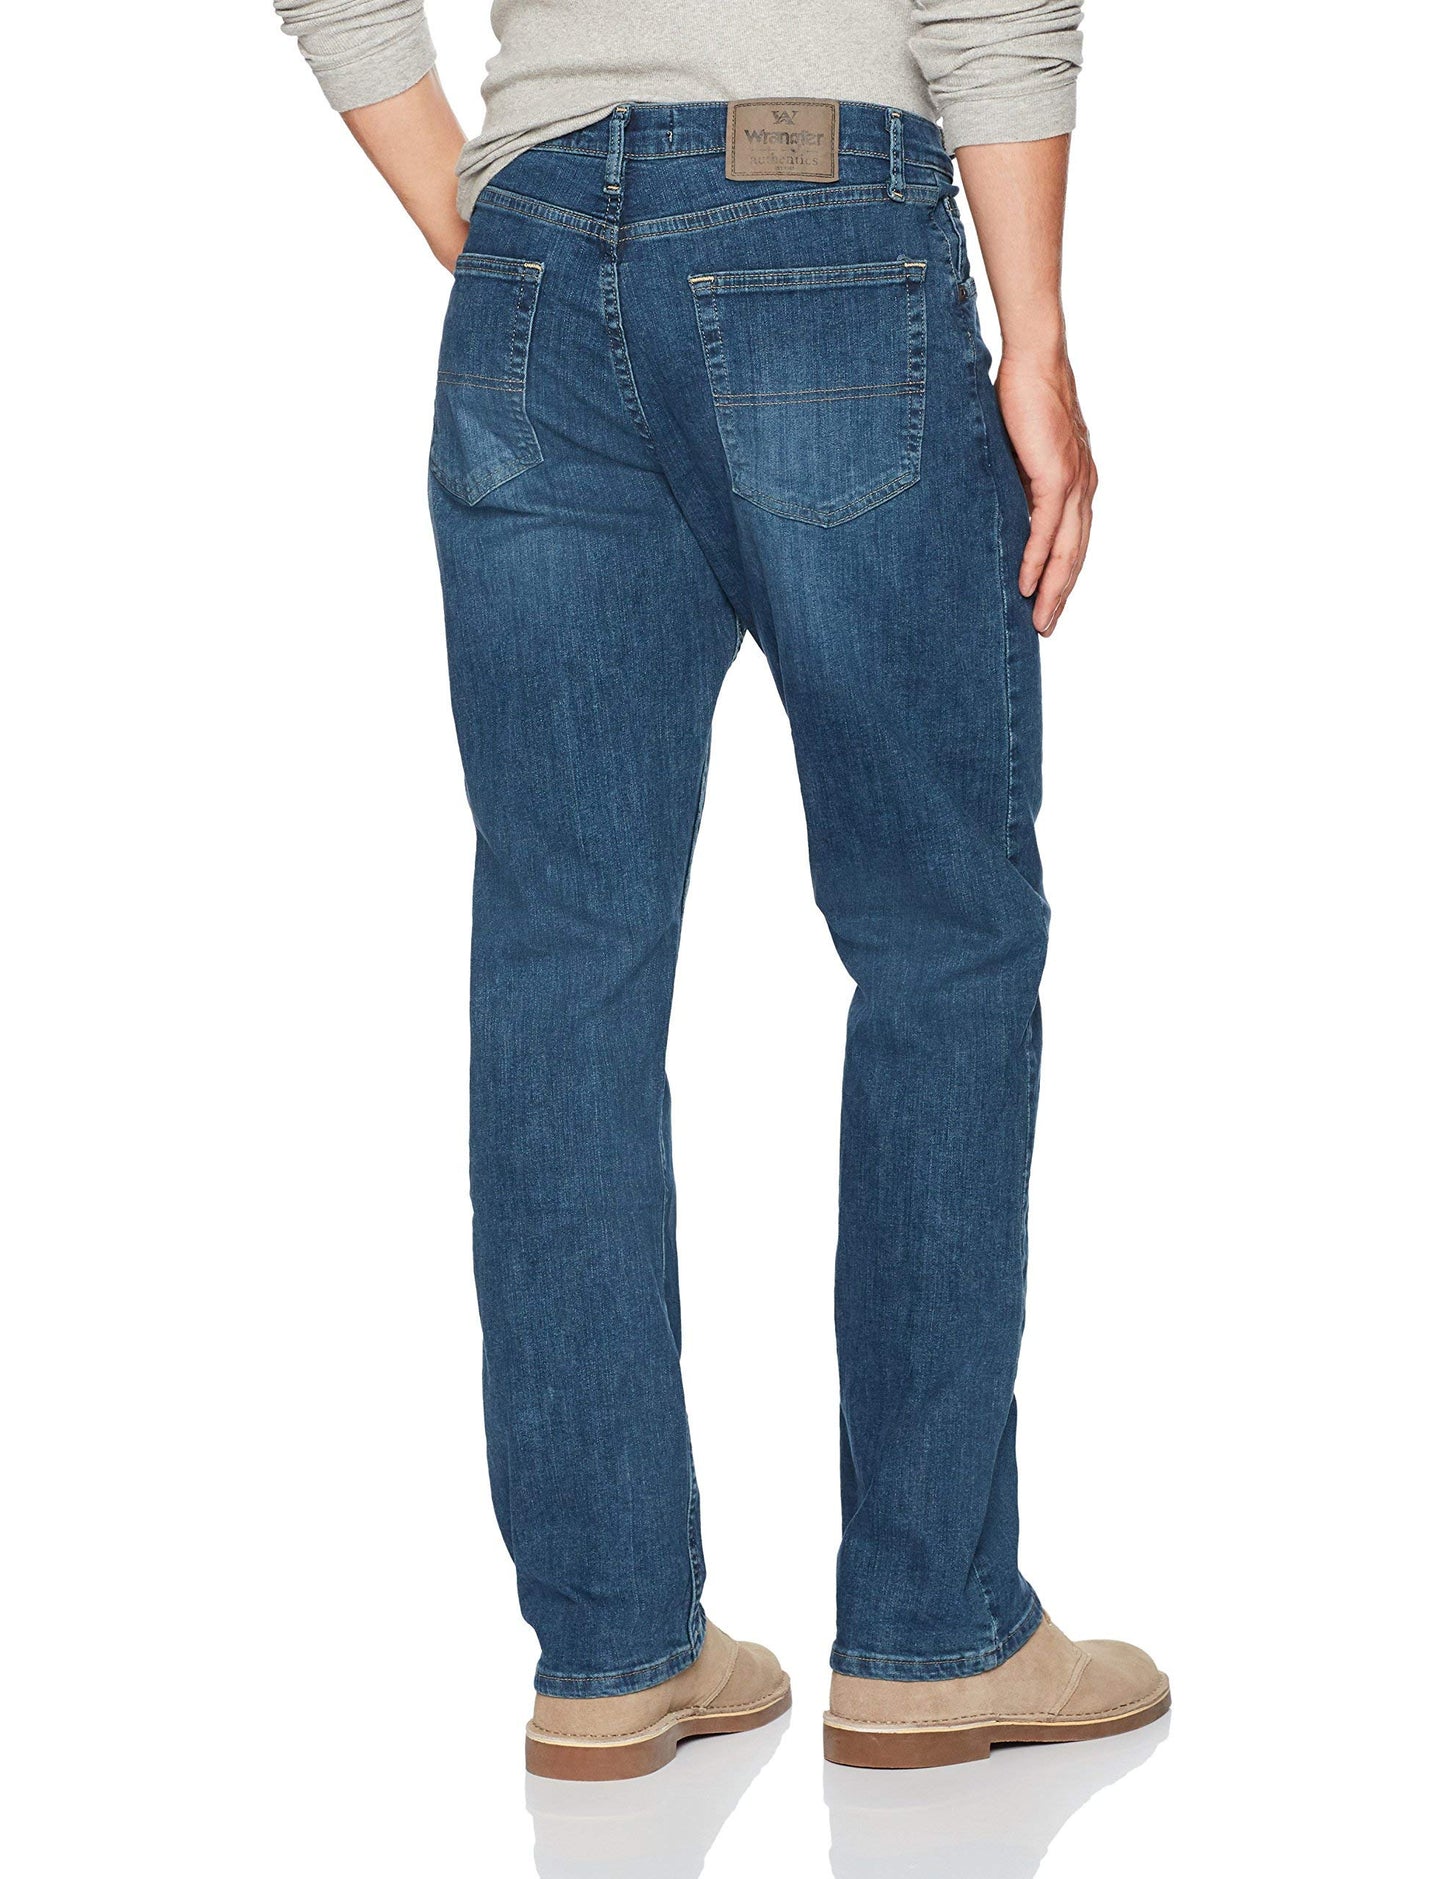 Wrangler Authentics Men's Classic 5-Pocket Relaxed Fit Jean, Slate Flex, 36W x 30L